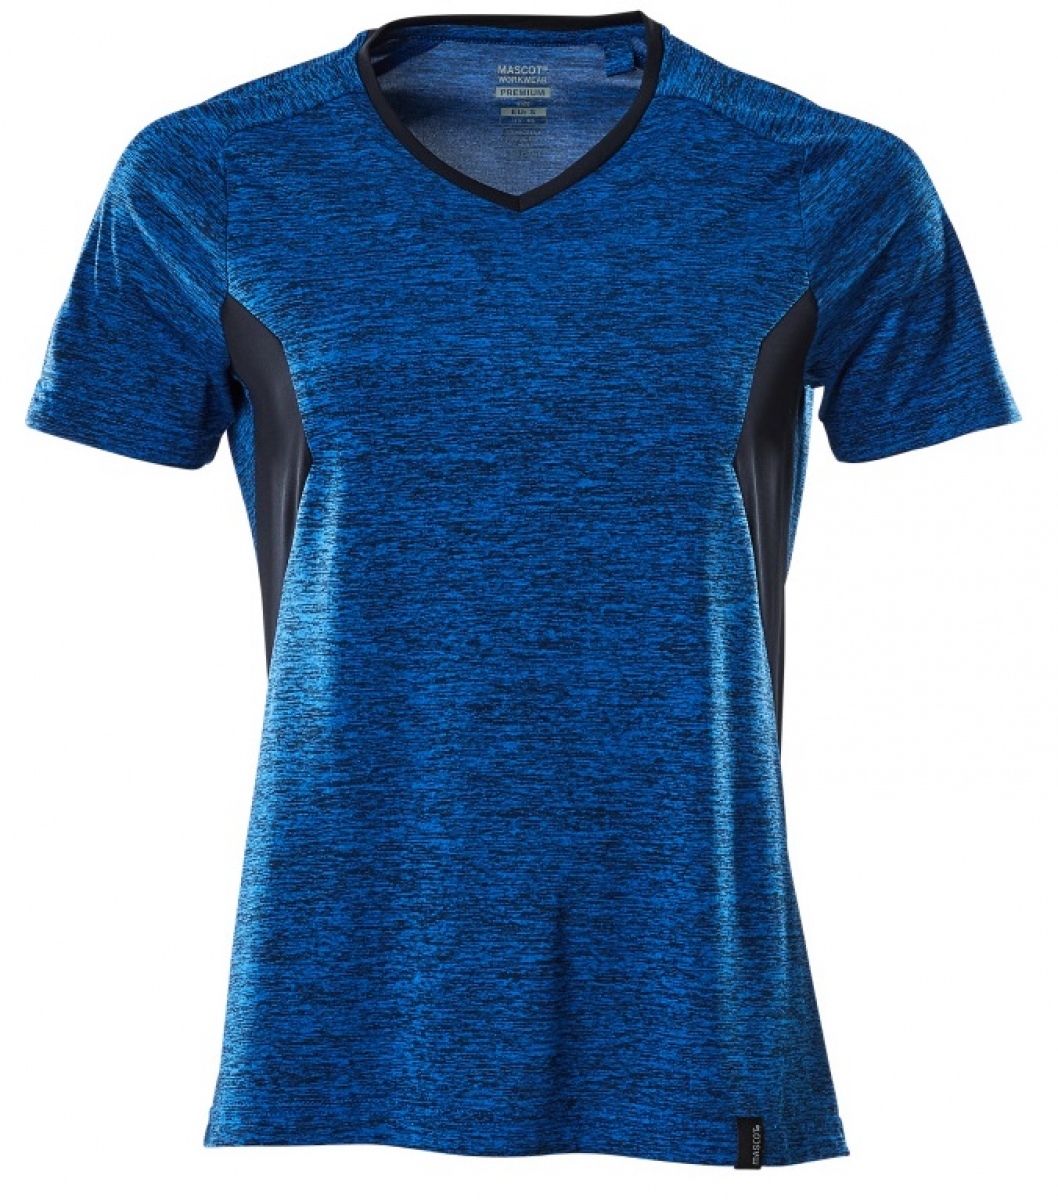 MASCOT-Worker-Shirts, Damen-T-Shirt, 150 g/m, azurblau/schwarzblau